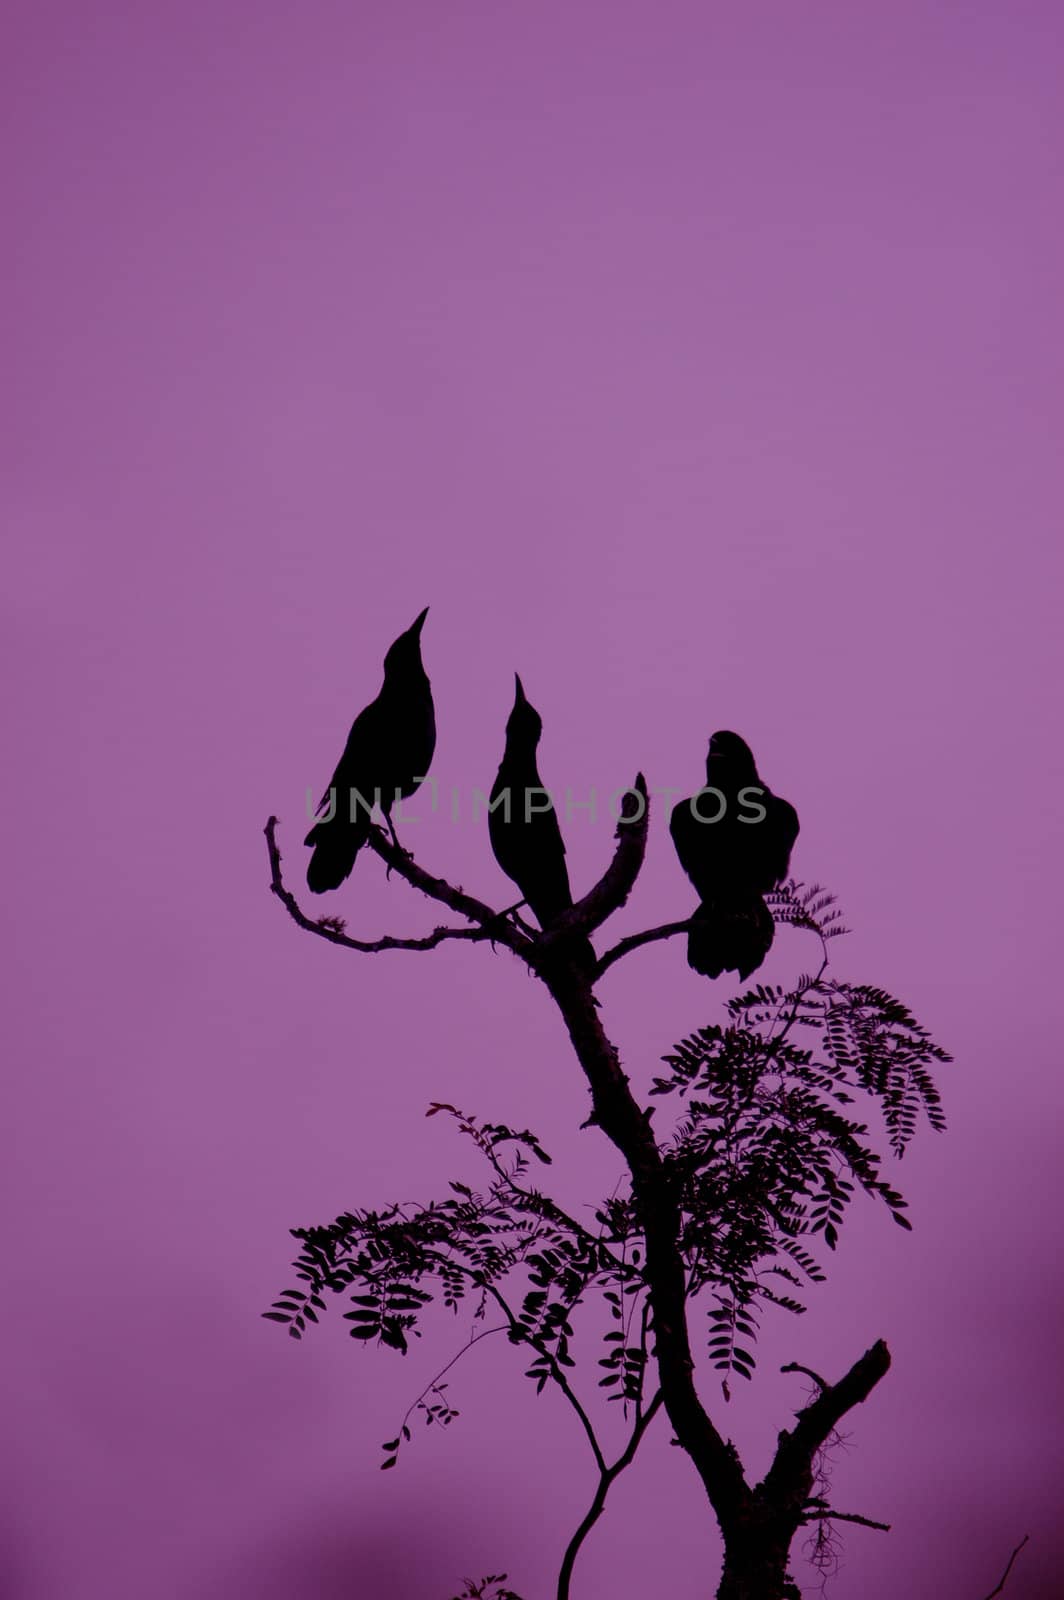 three crows on a tree